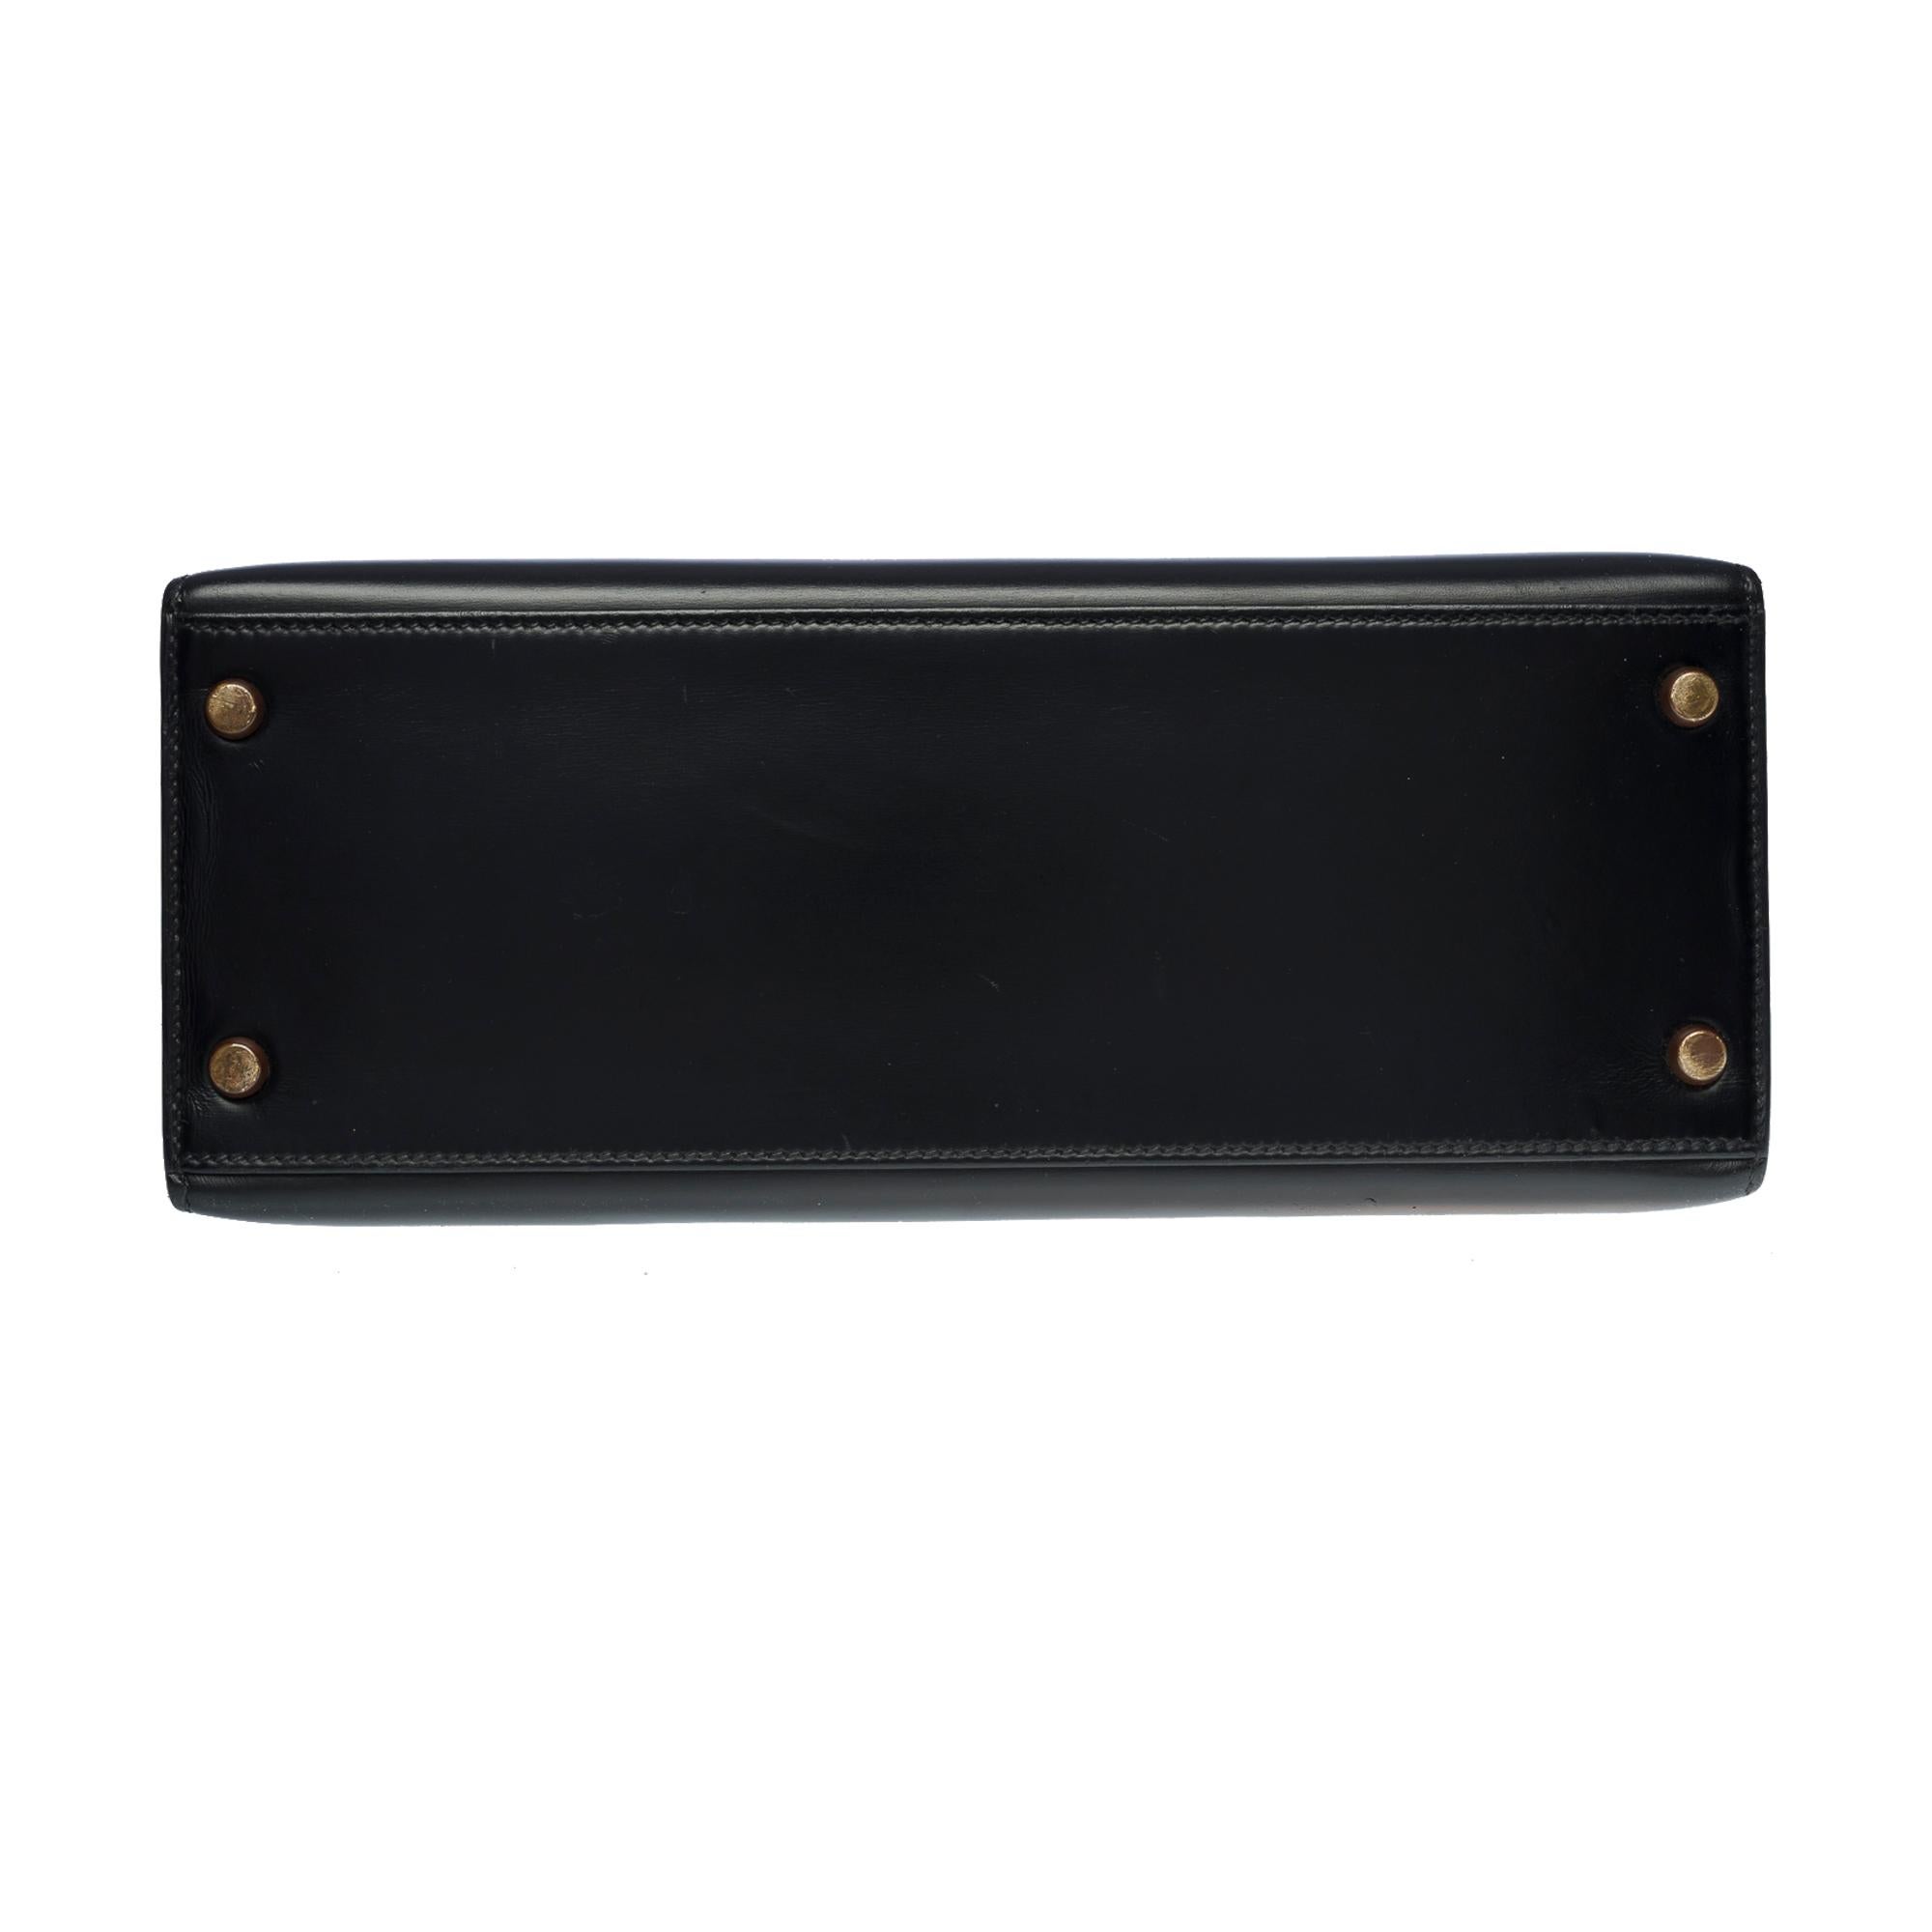 Gorgeous Hermes Kelly 28 sellier handbag strap in black box calf leather, GHW 2